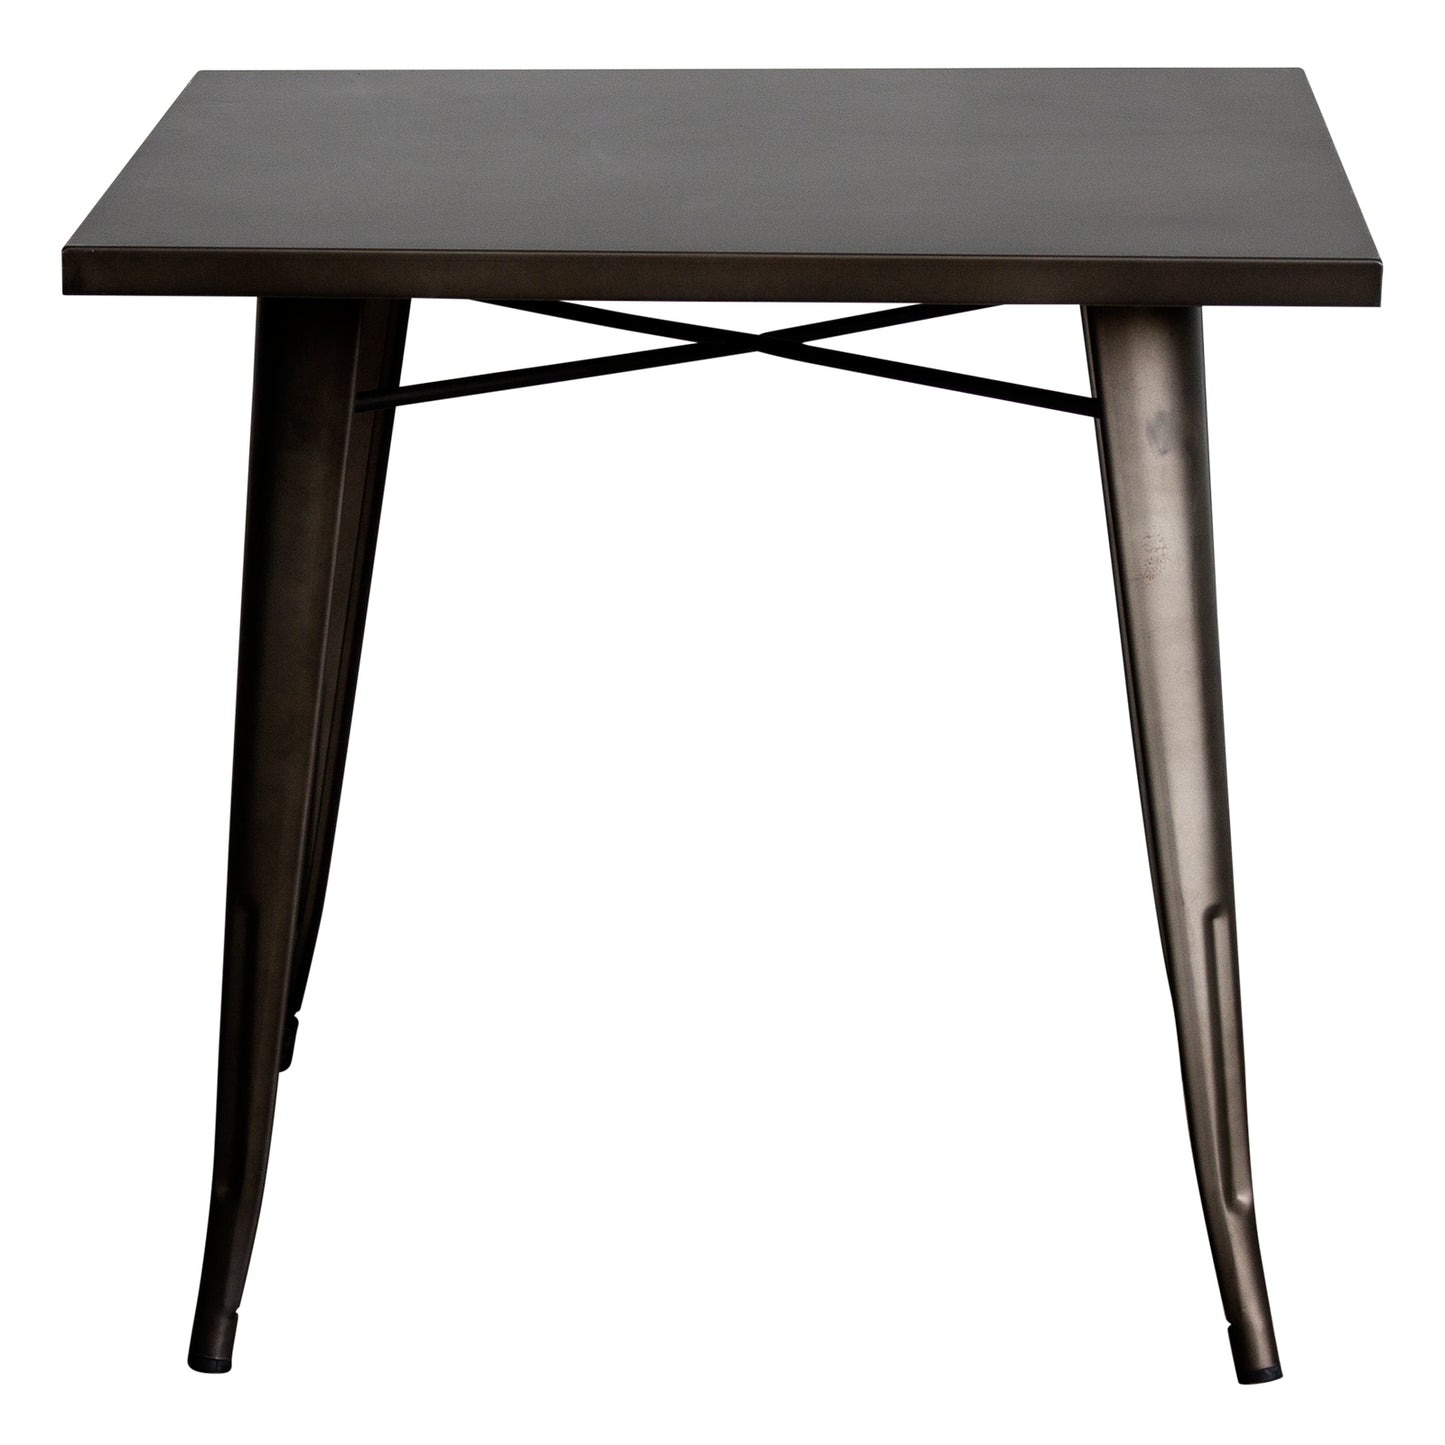 5PC Belvedere Table Palermo Chair & Rho Stool Set - Gun Metal Grey